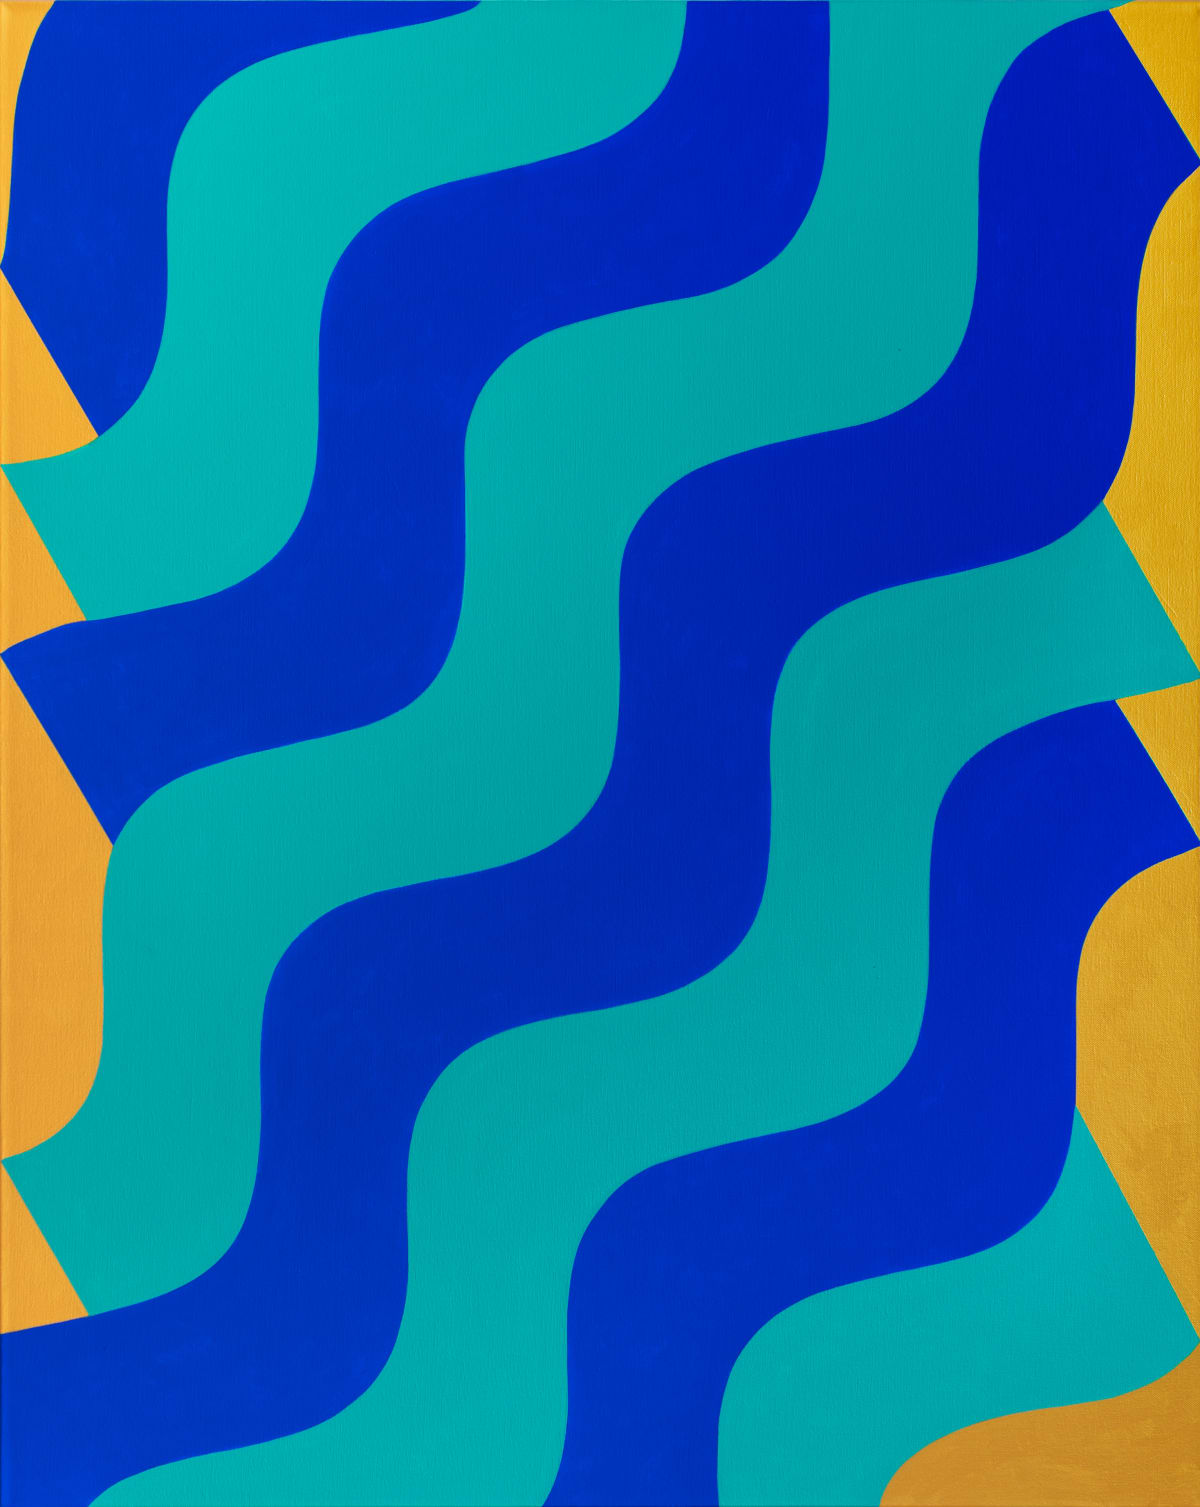 نقاش موج های رنگی با موج کرونا رفت لینک : https://asarartmagazine.ir/?p=20962 👇 سایت : AsarArtMagazine.ir اینستاگرام :‌ instagram.com/AsarArtMagazine تلگرام : t.me/AsarArtMagazine 👆